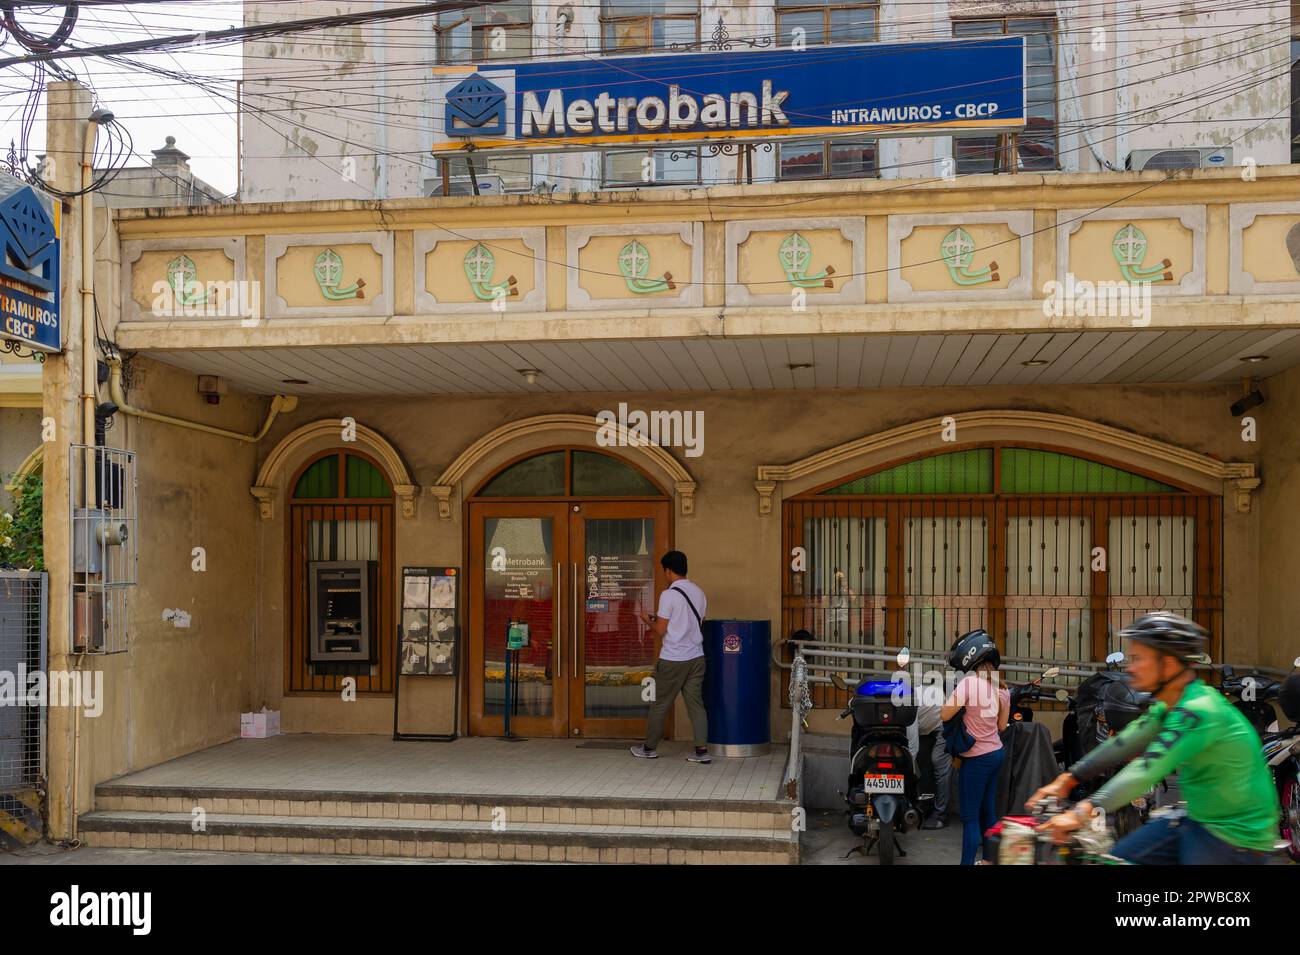 The Metrobank Intramuros branch, Manila, The Philippines Stock Photo